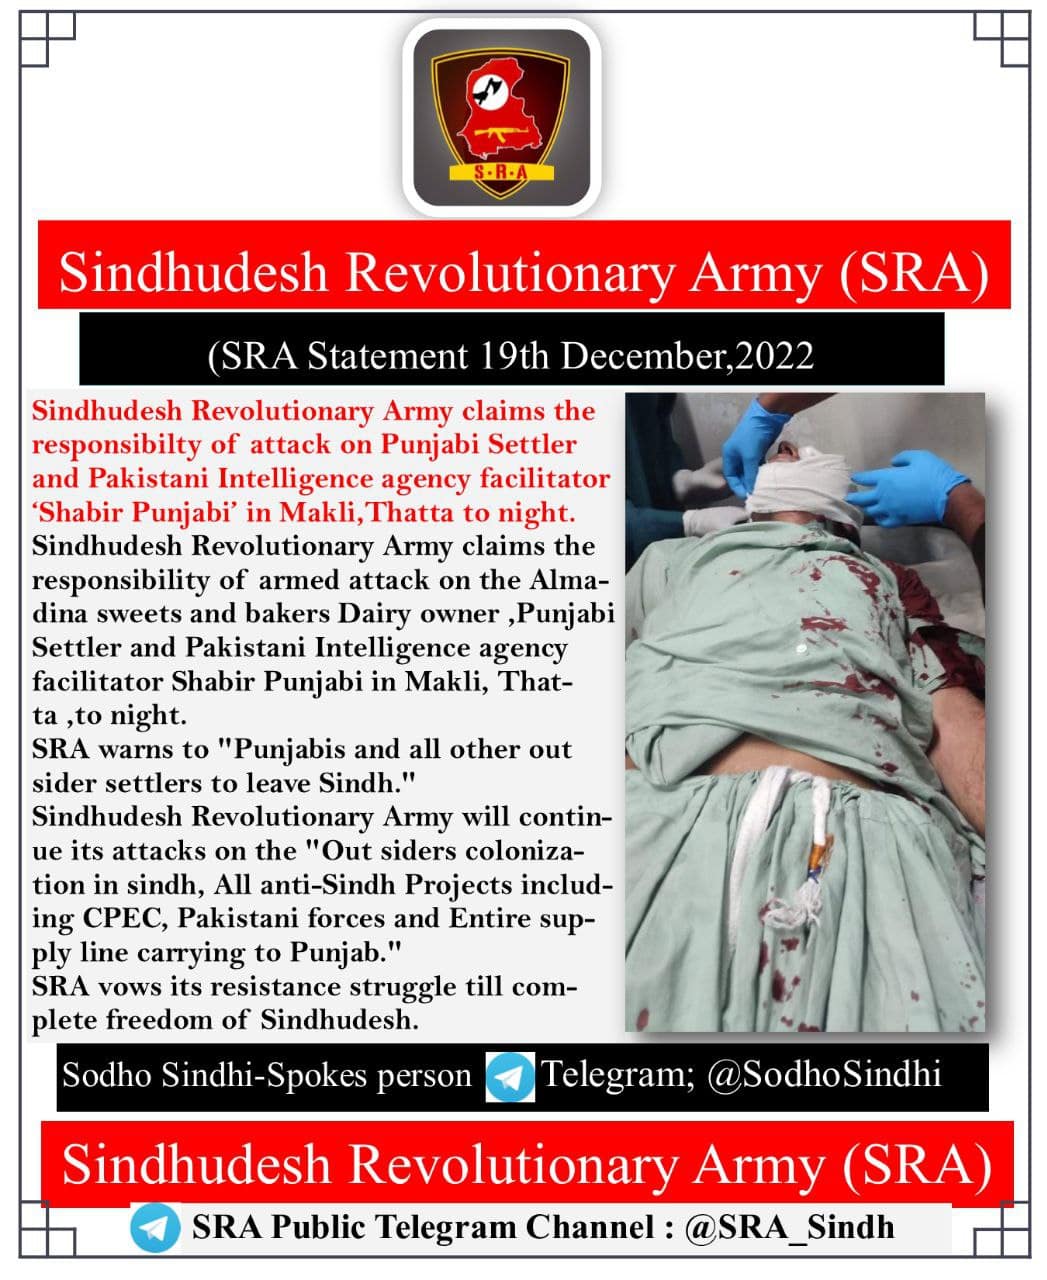 Sindhudesh Revolutionary Army (SRA) Attacked Punjabi Settler and 'Pakistani Intelligence Agency' in Makli, Thatta, Sindh Province, Pakistan - 19 December 2022